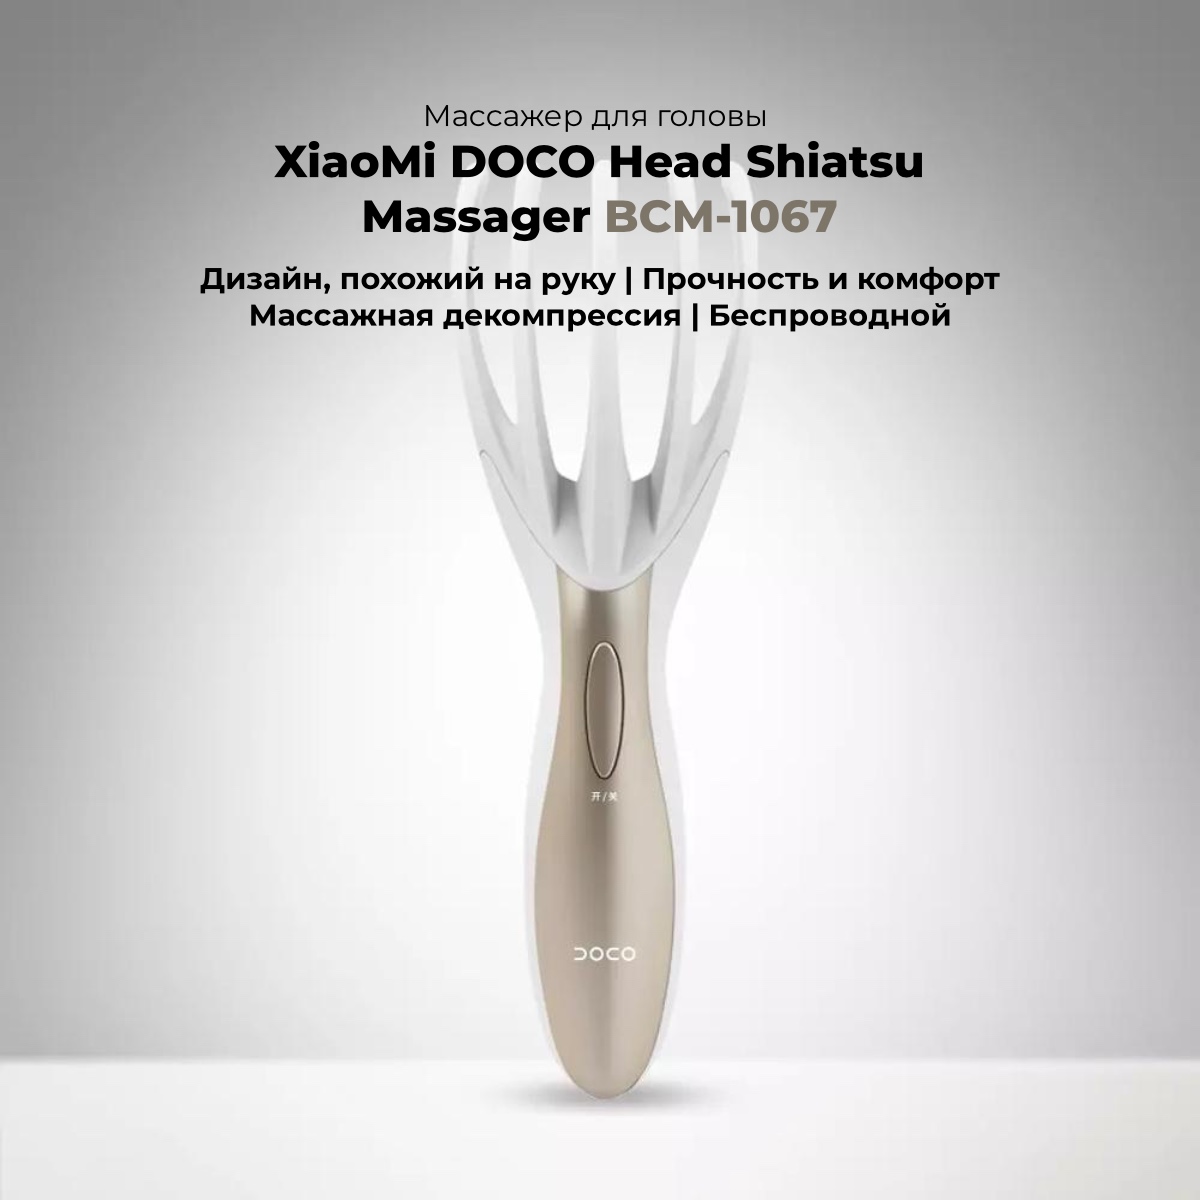 XiaoMi-DOCO-Head-Shiatsu-Massager-BCM-1067-01